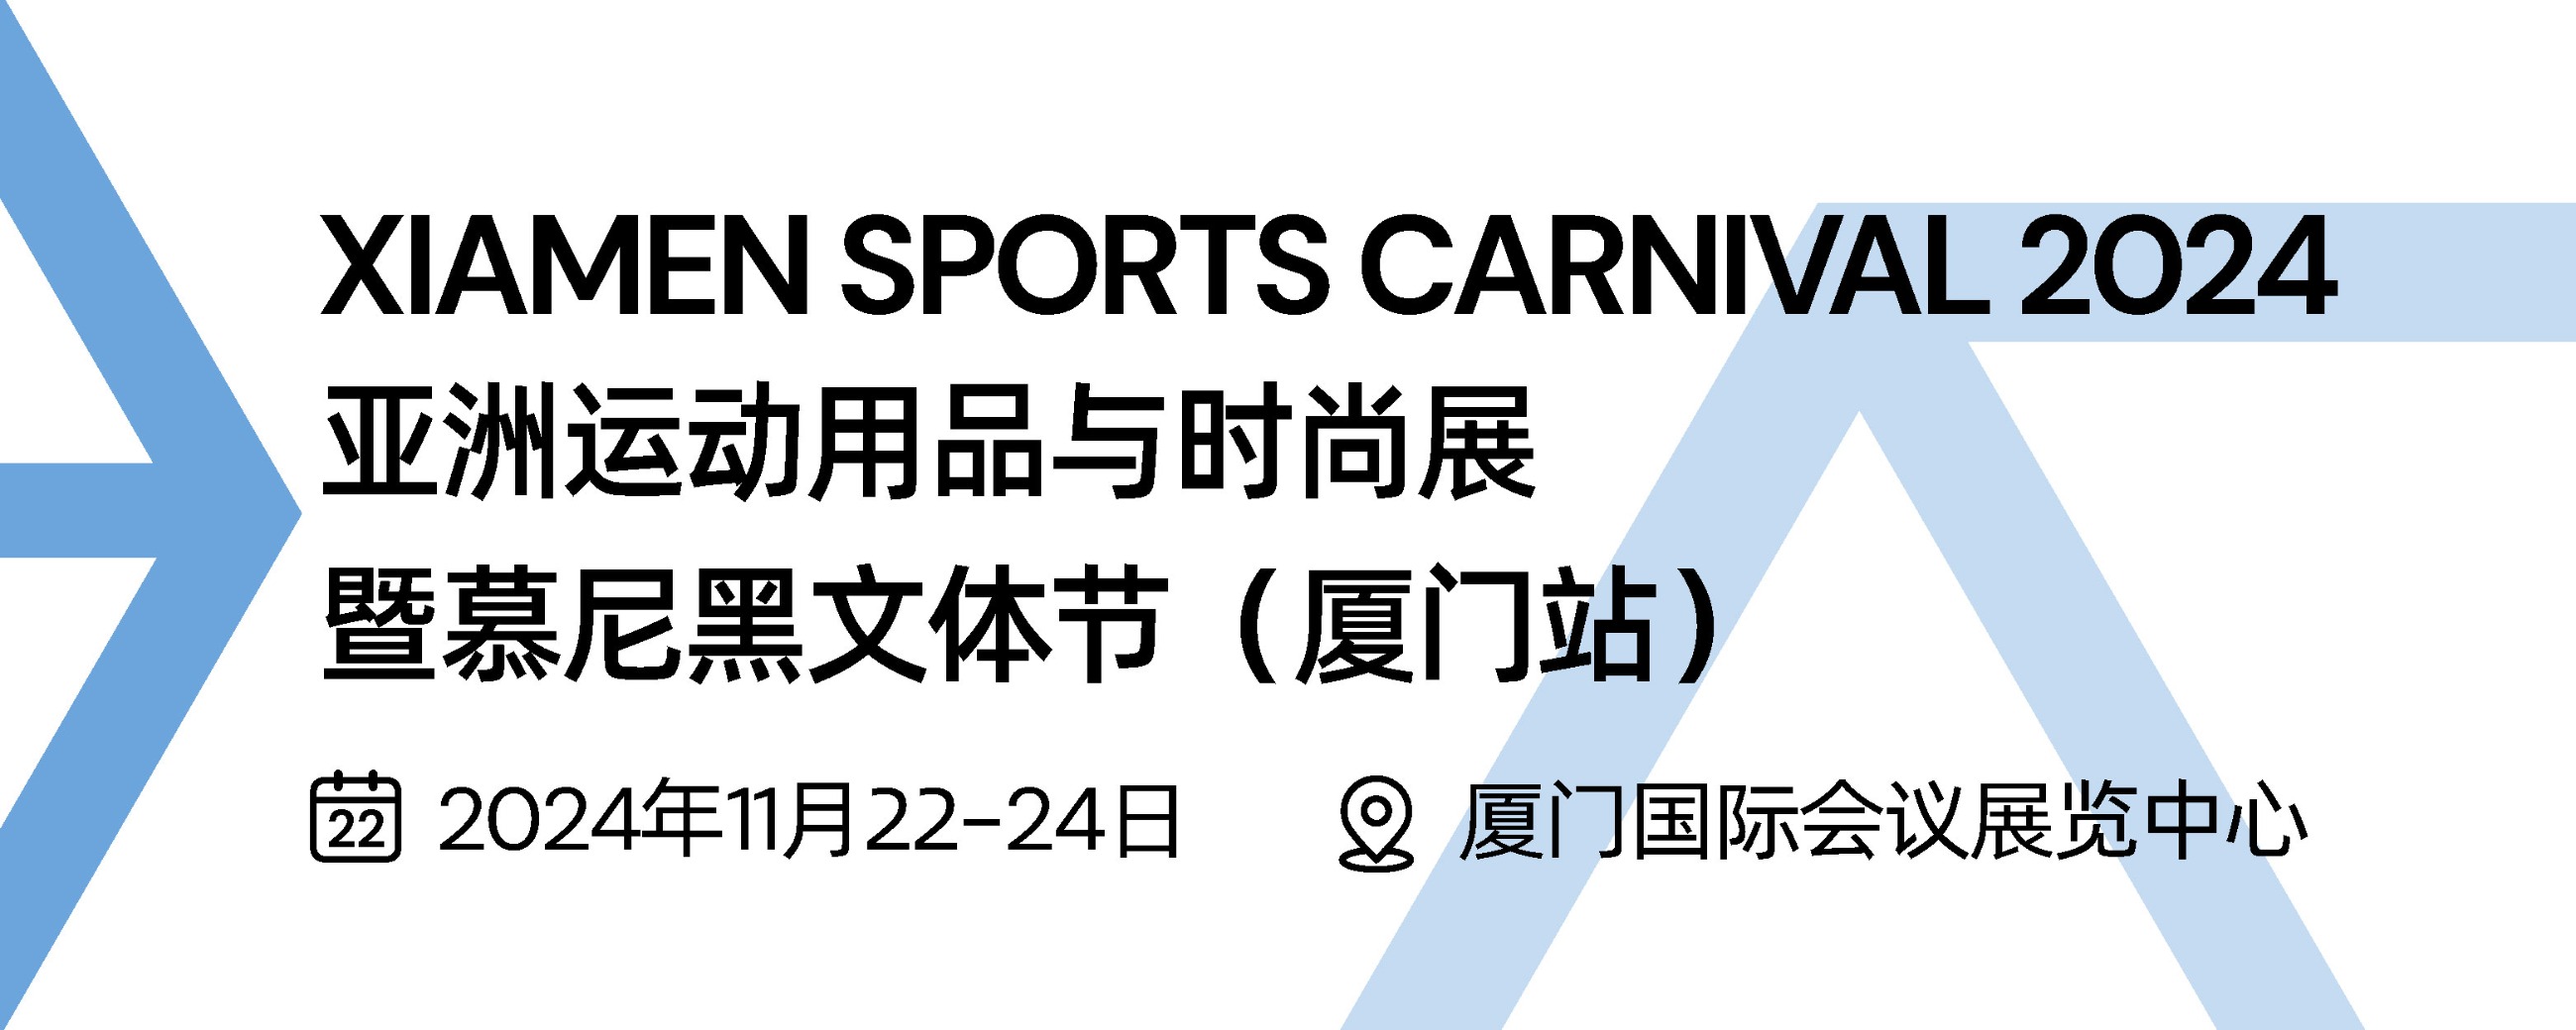 Xiamen Sports Carnival 2024. 亚洲运动用品与时尚展（厦门站） 2024年11月22-24日 ② 厦门国际会议展览中心